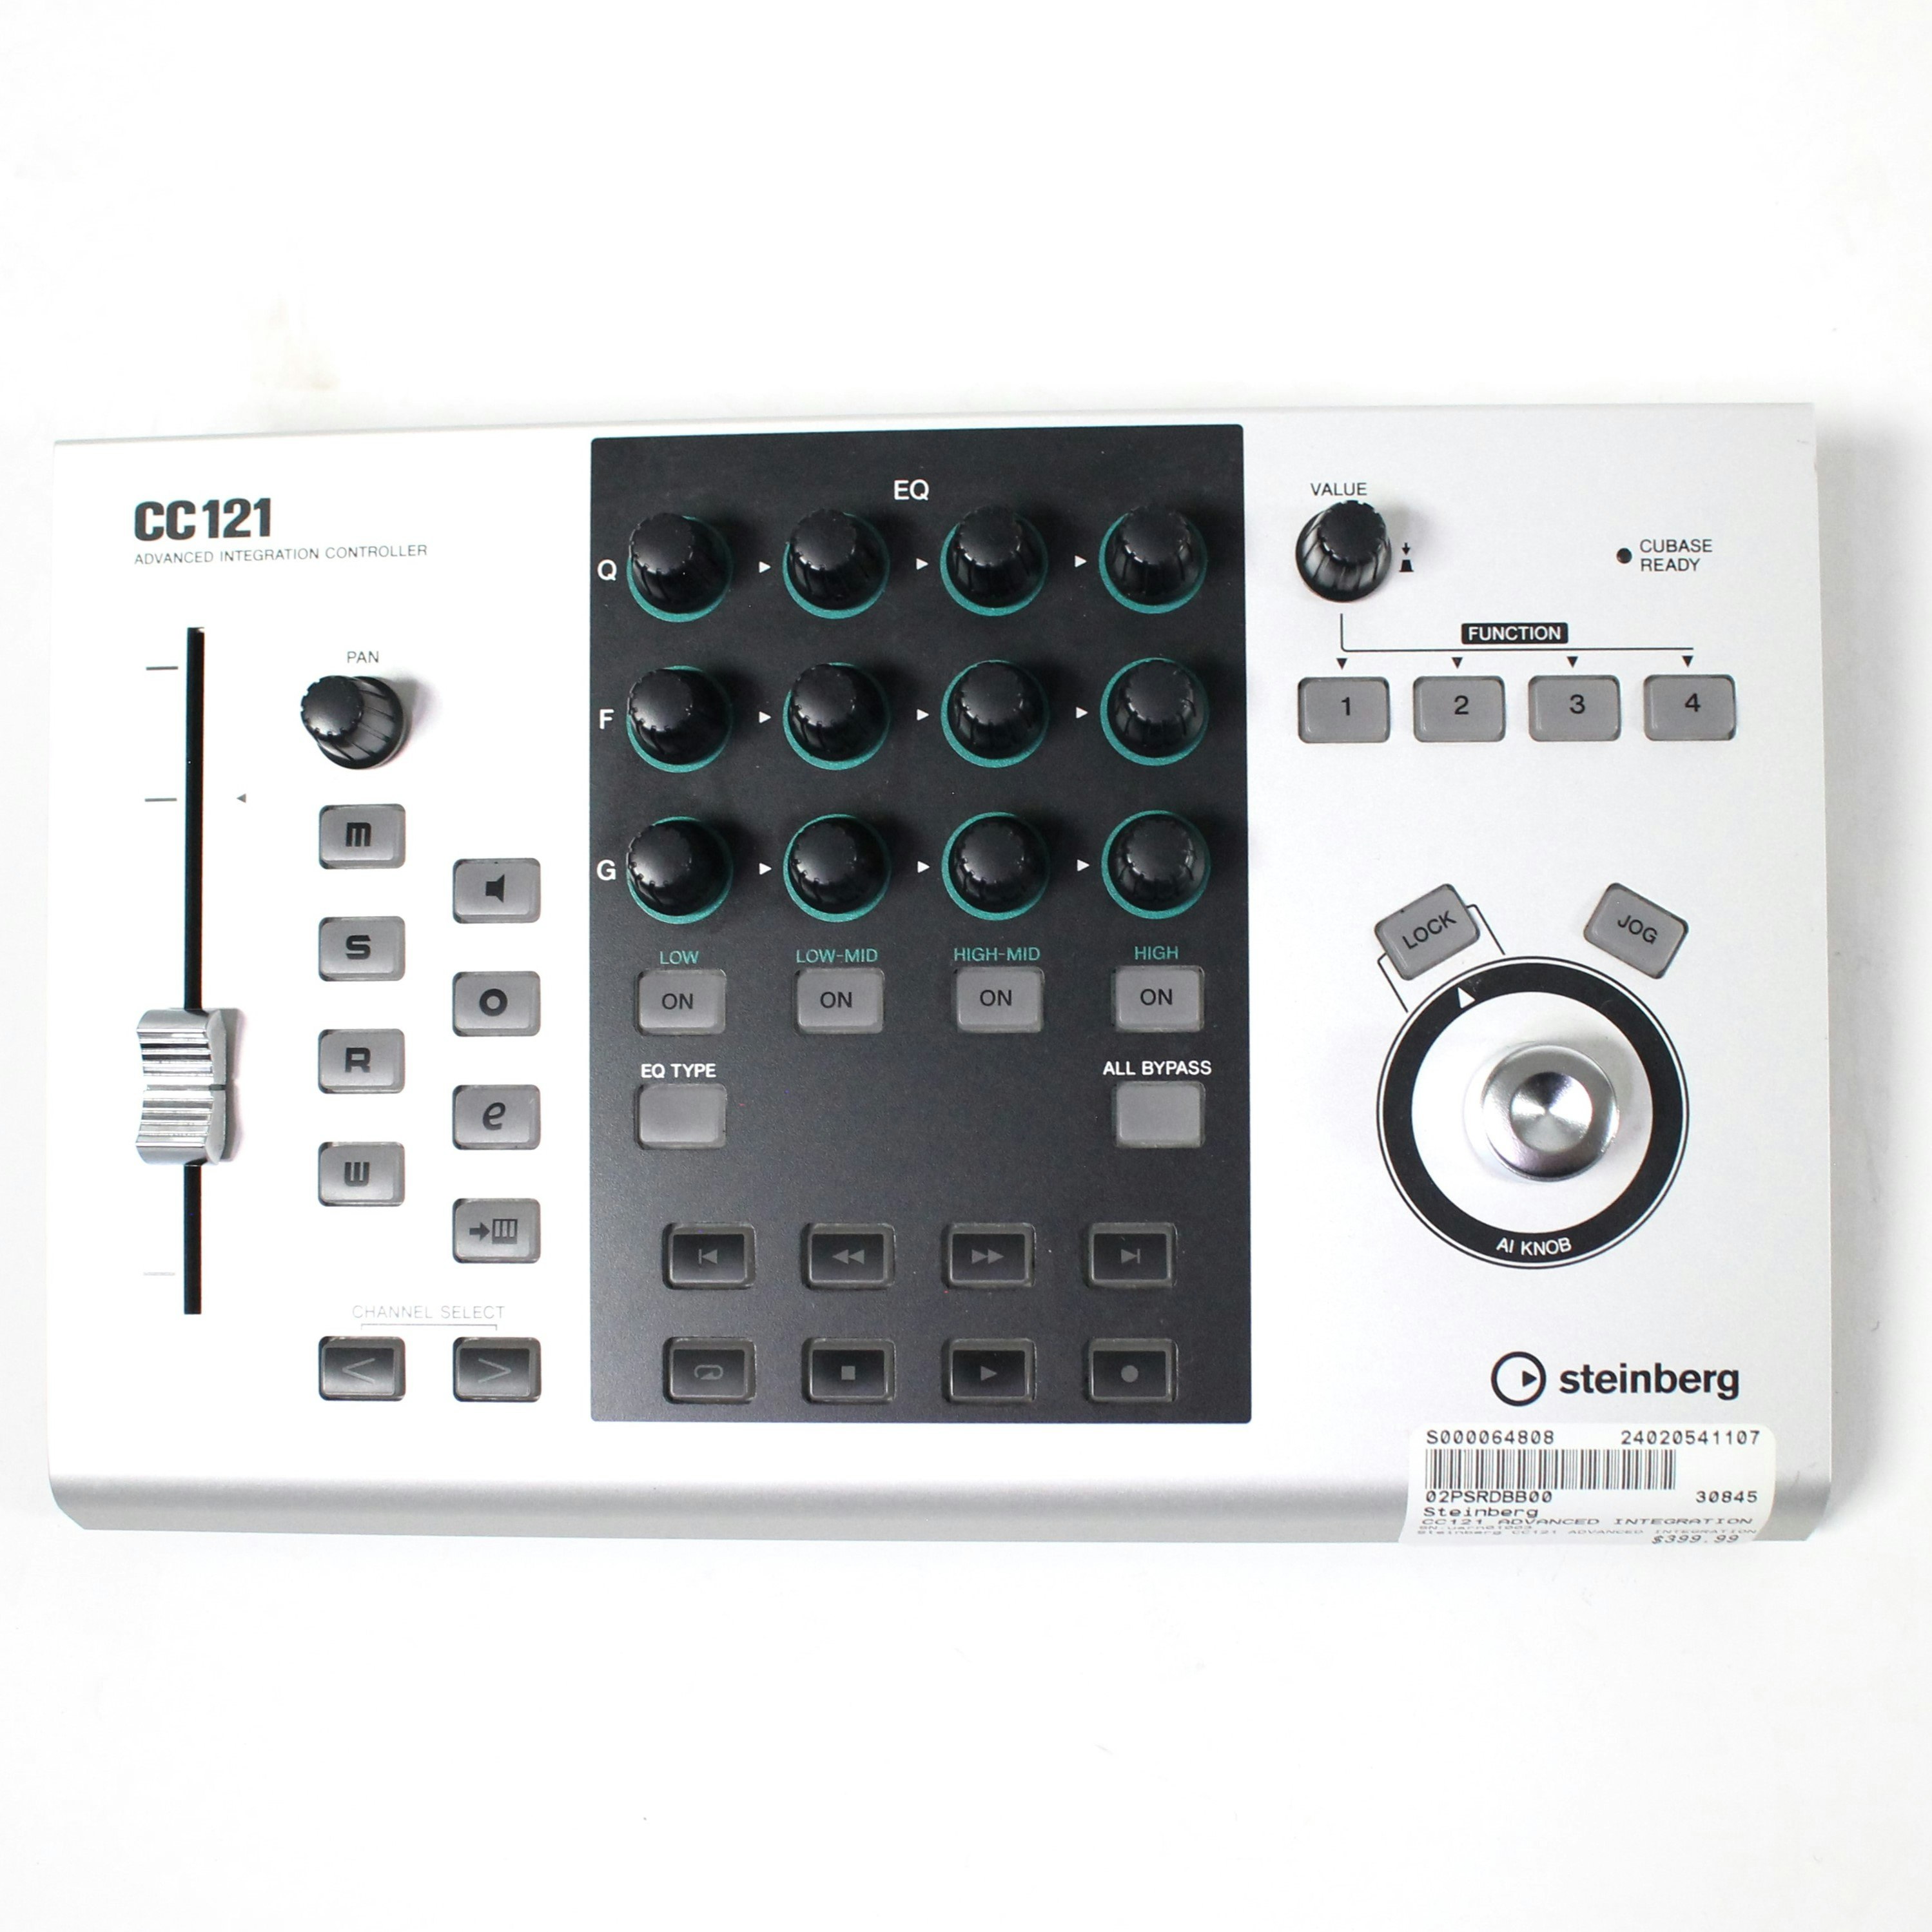 Used Steinberg CC121 ADVANCED INTEGRATION CONTROLLER Recording Equipment